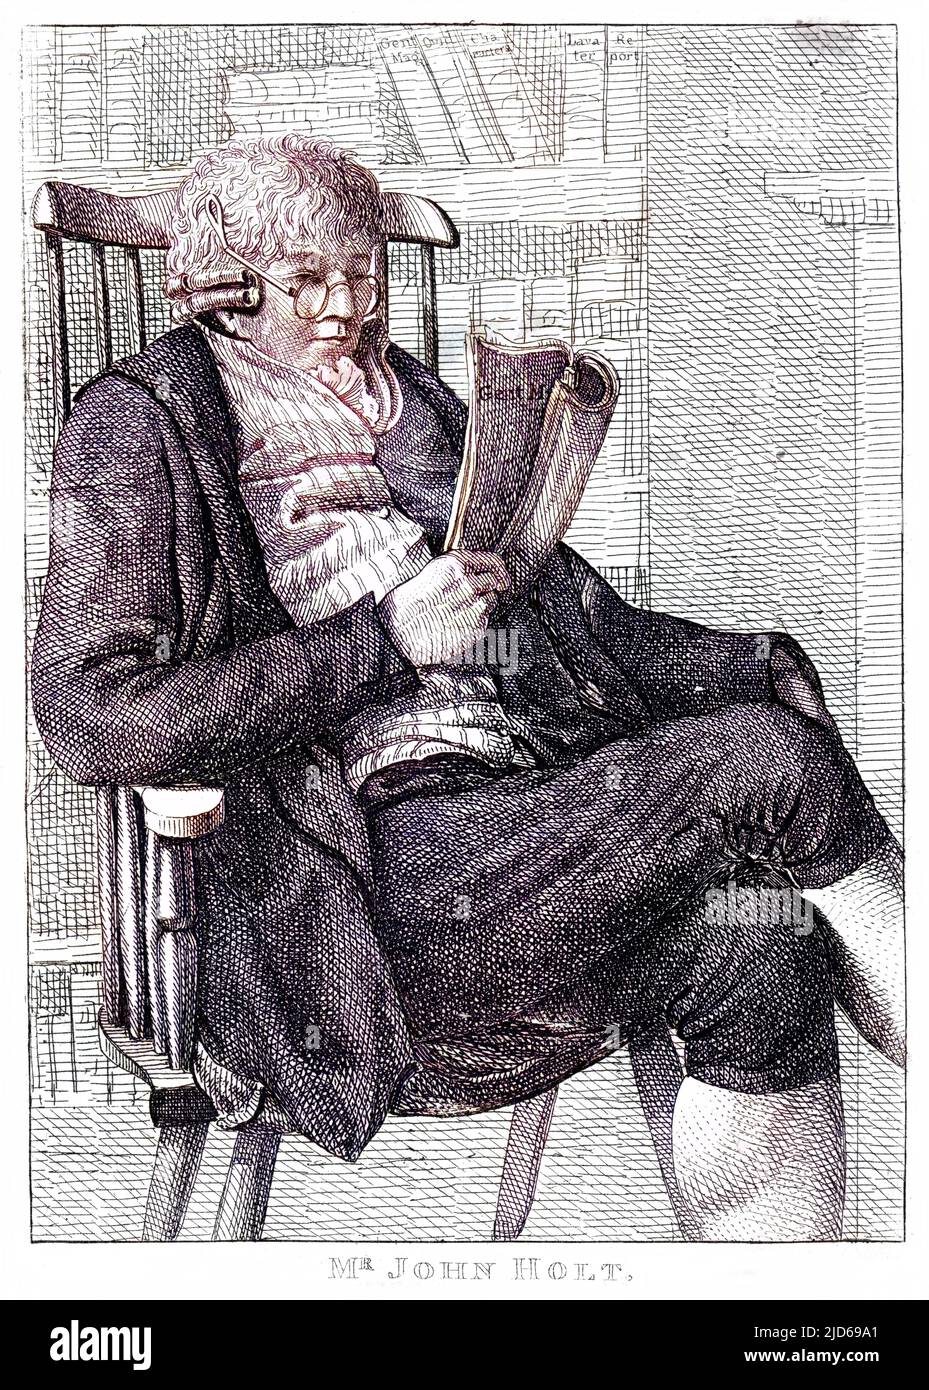 JOHN HOLT Antiquariat, dargestellt Lesung an seinem Kamin colorized Version von : 10161105 Datum: 1743 - 1801 Stockfoto